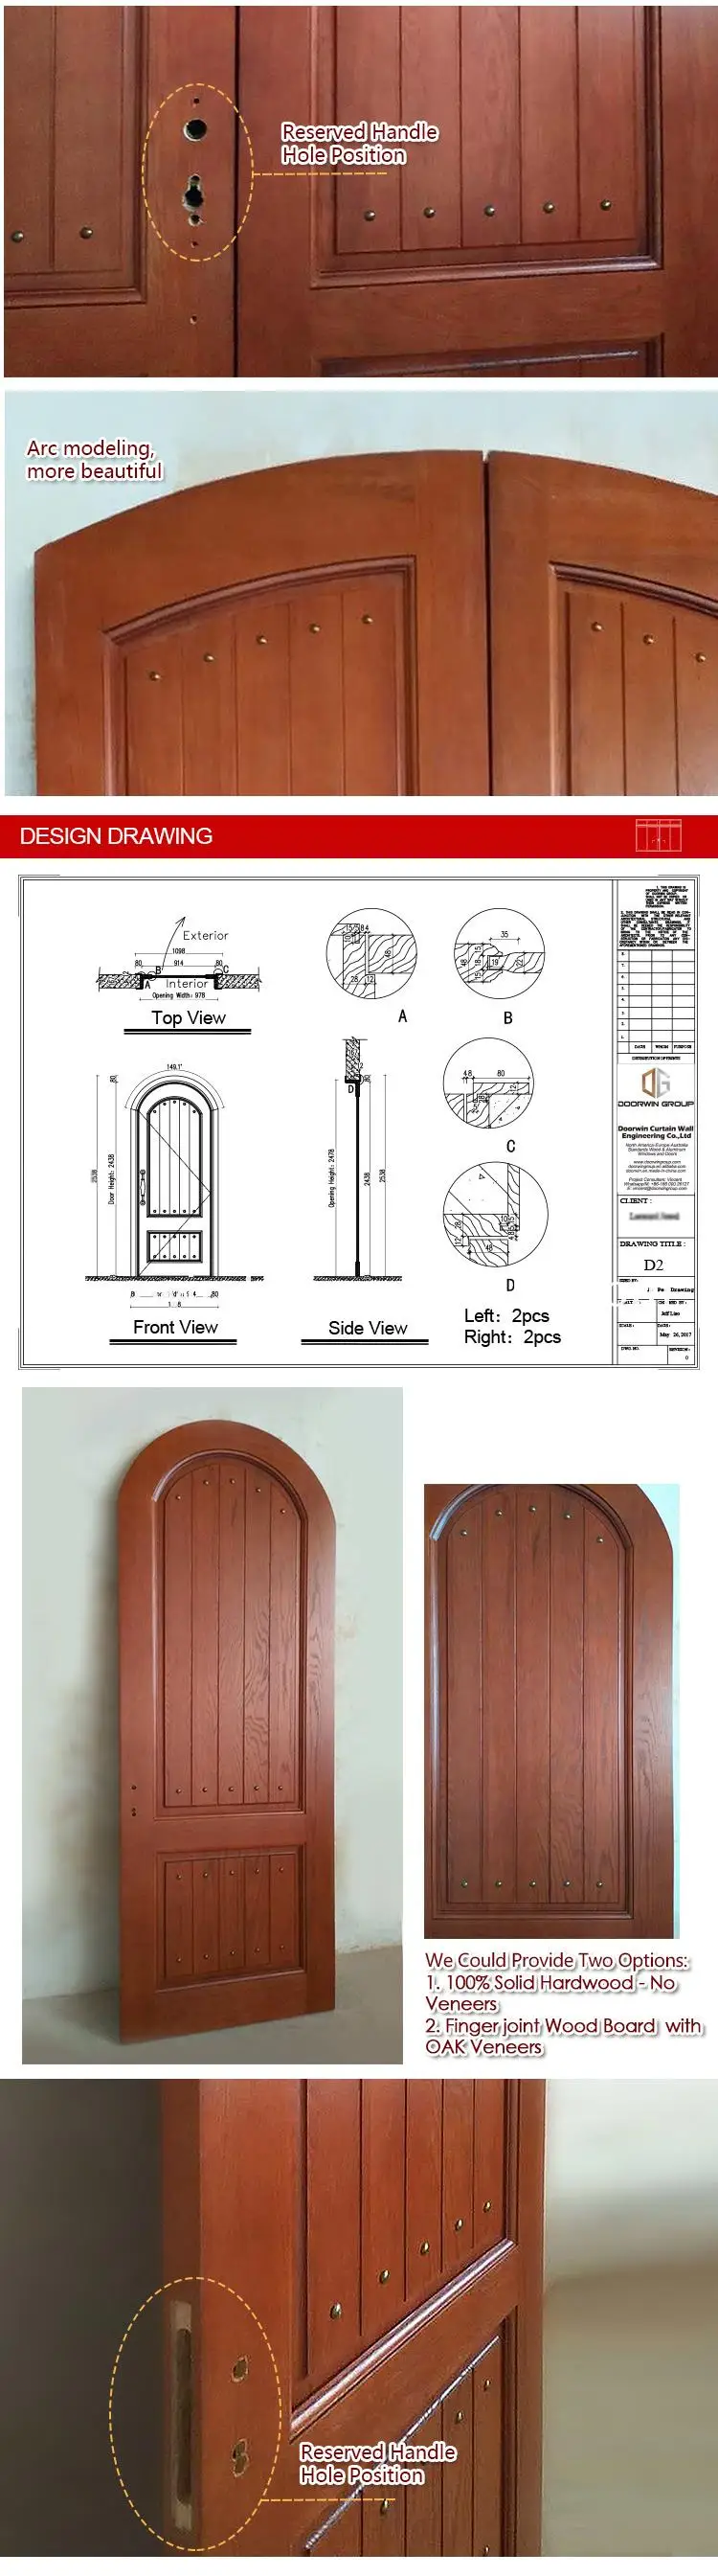 High quality 3 panel interior wood door